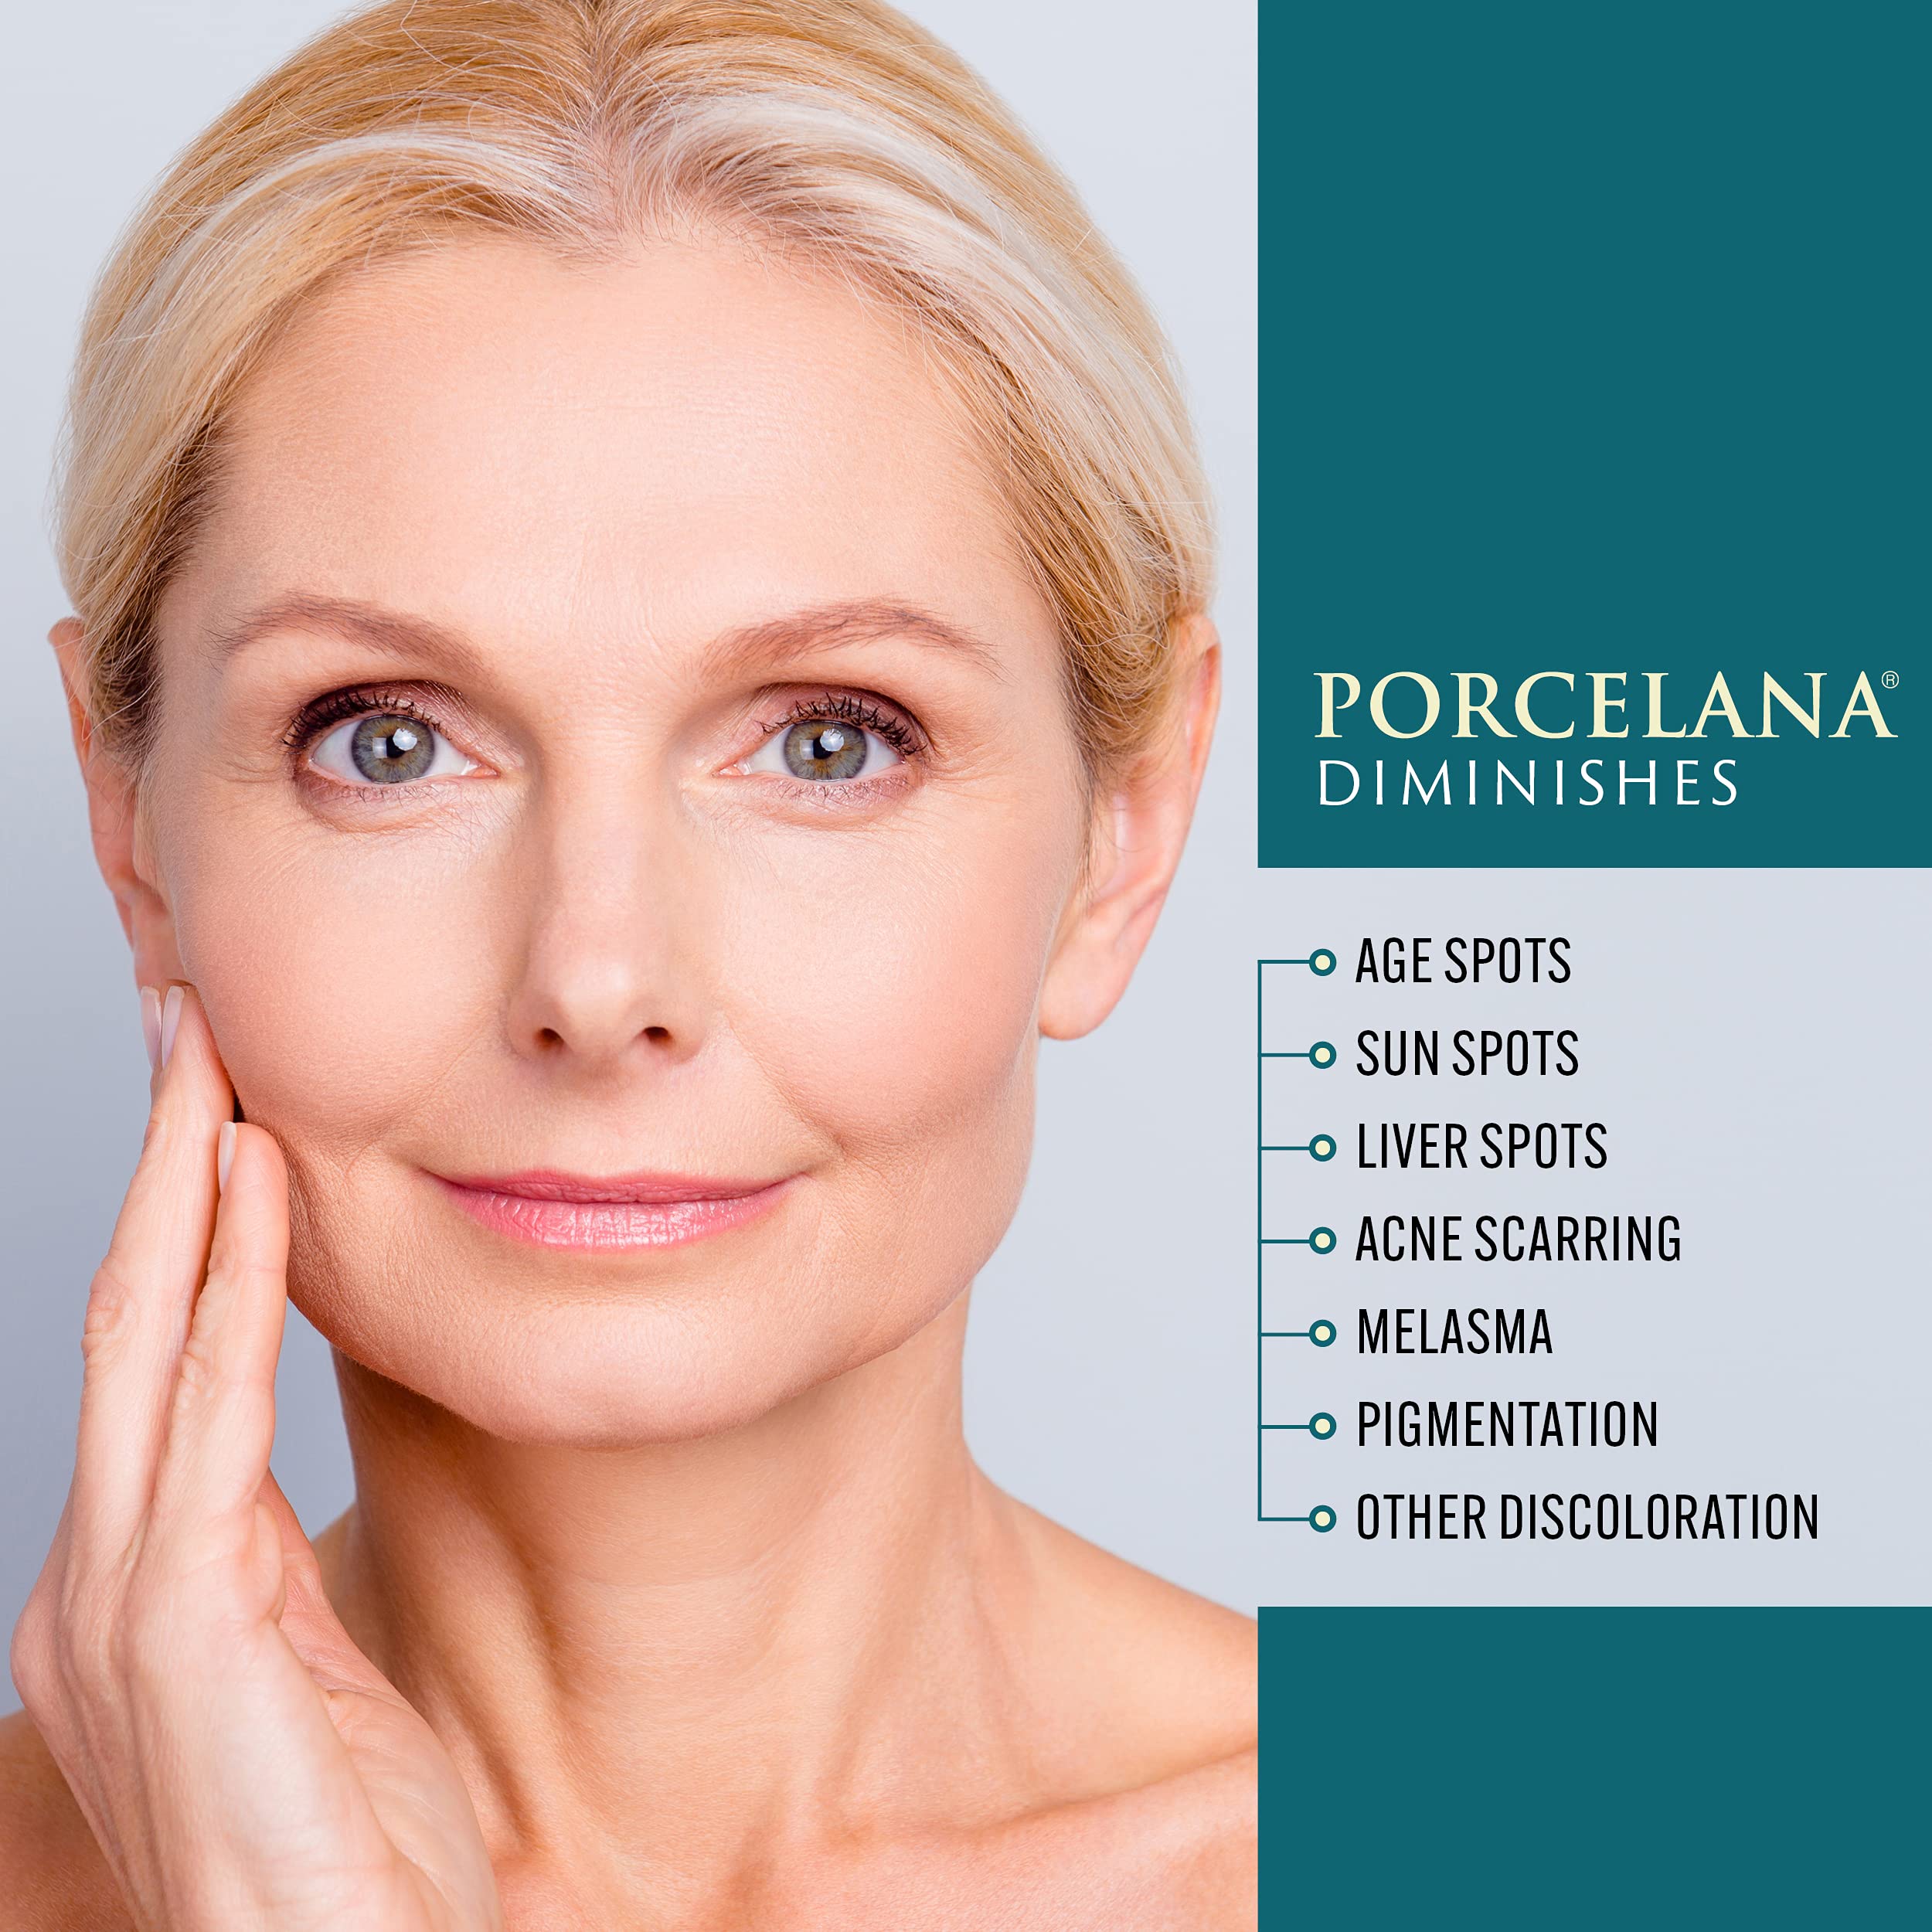 Porcelana Daytime Hydration Cream For Face & Body [Updated Formula] - Fades Dark Spots & Evens Skin Tone - For Sun & Age Spots, Acne Scarring, Melasma & Discoloration - Antioxidant Moisturizer (3 oz)